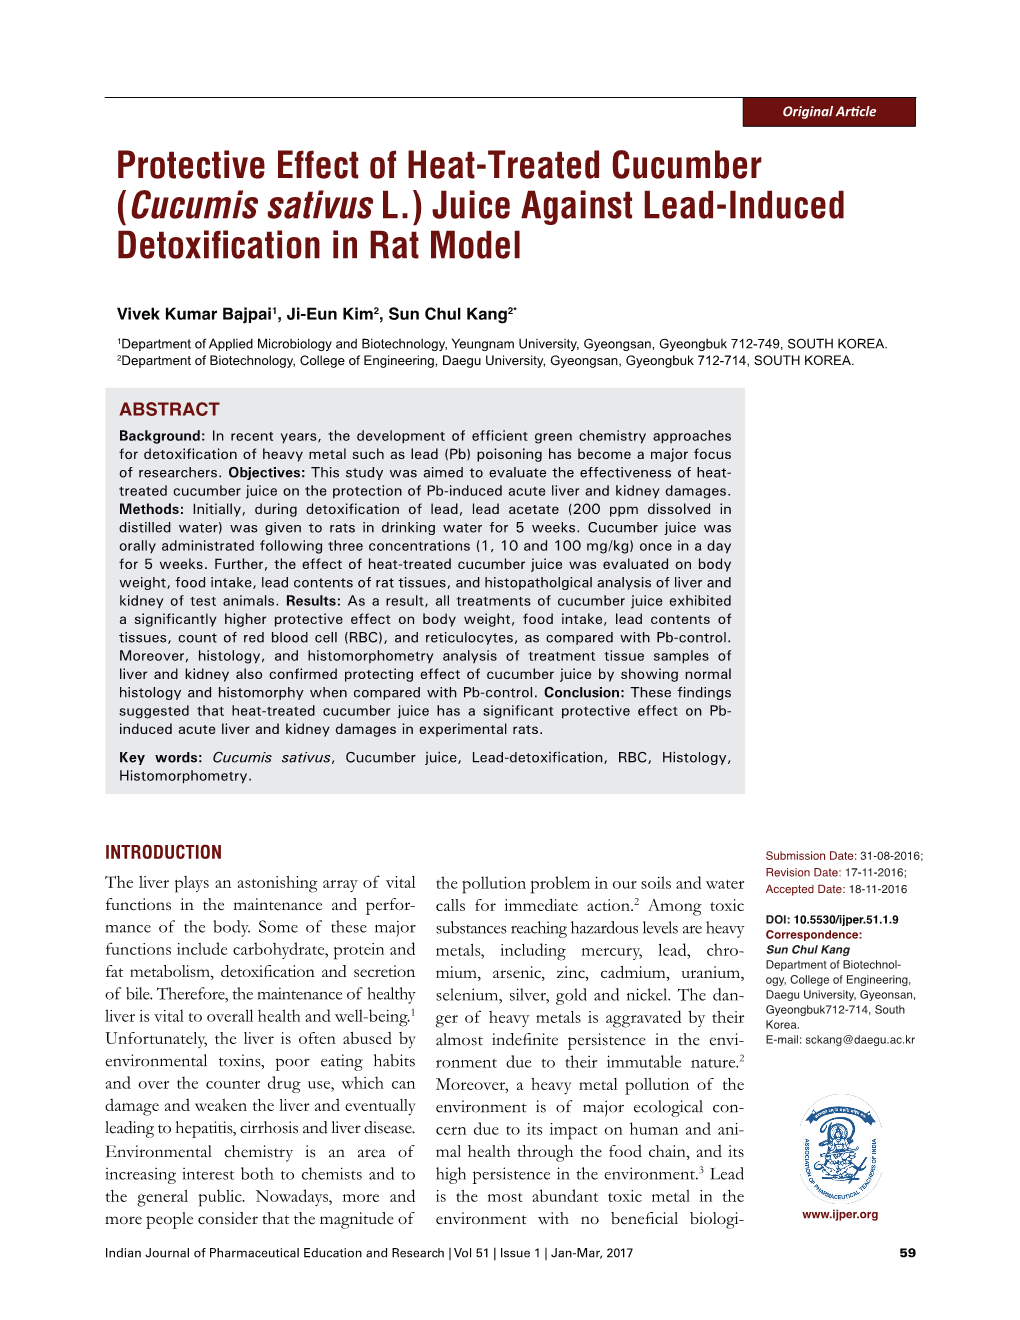 Protective Effect of Heat-Treated Cucumber (Cucumis Sativus L.) Juice Against Lead-Induced Detoxification in Rat Model